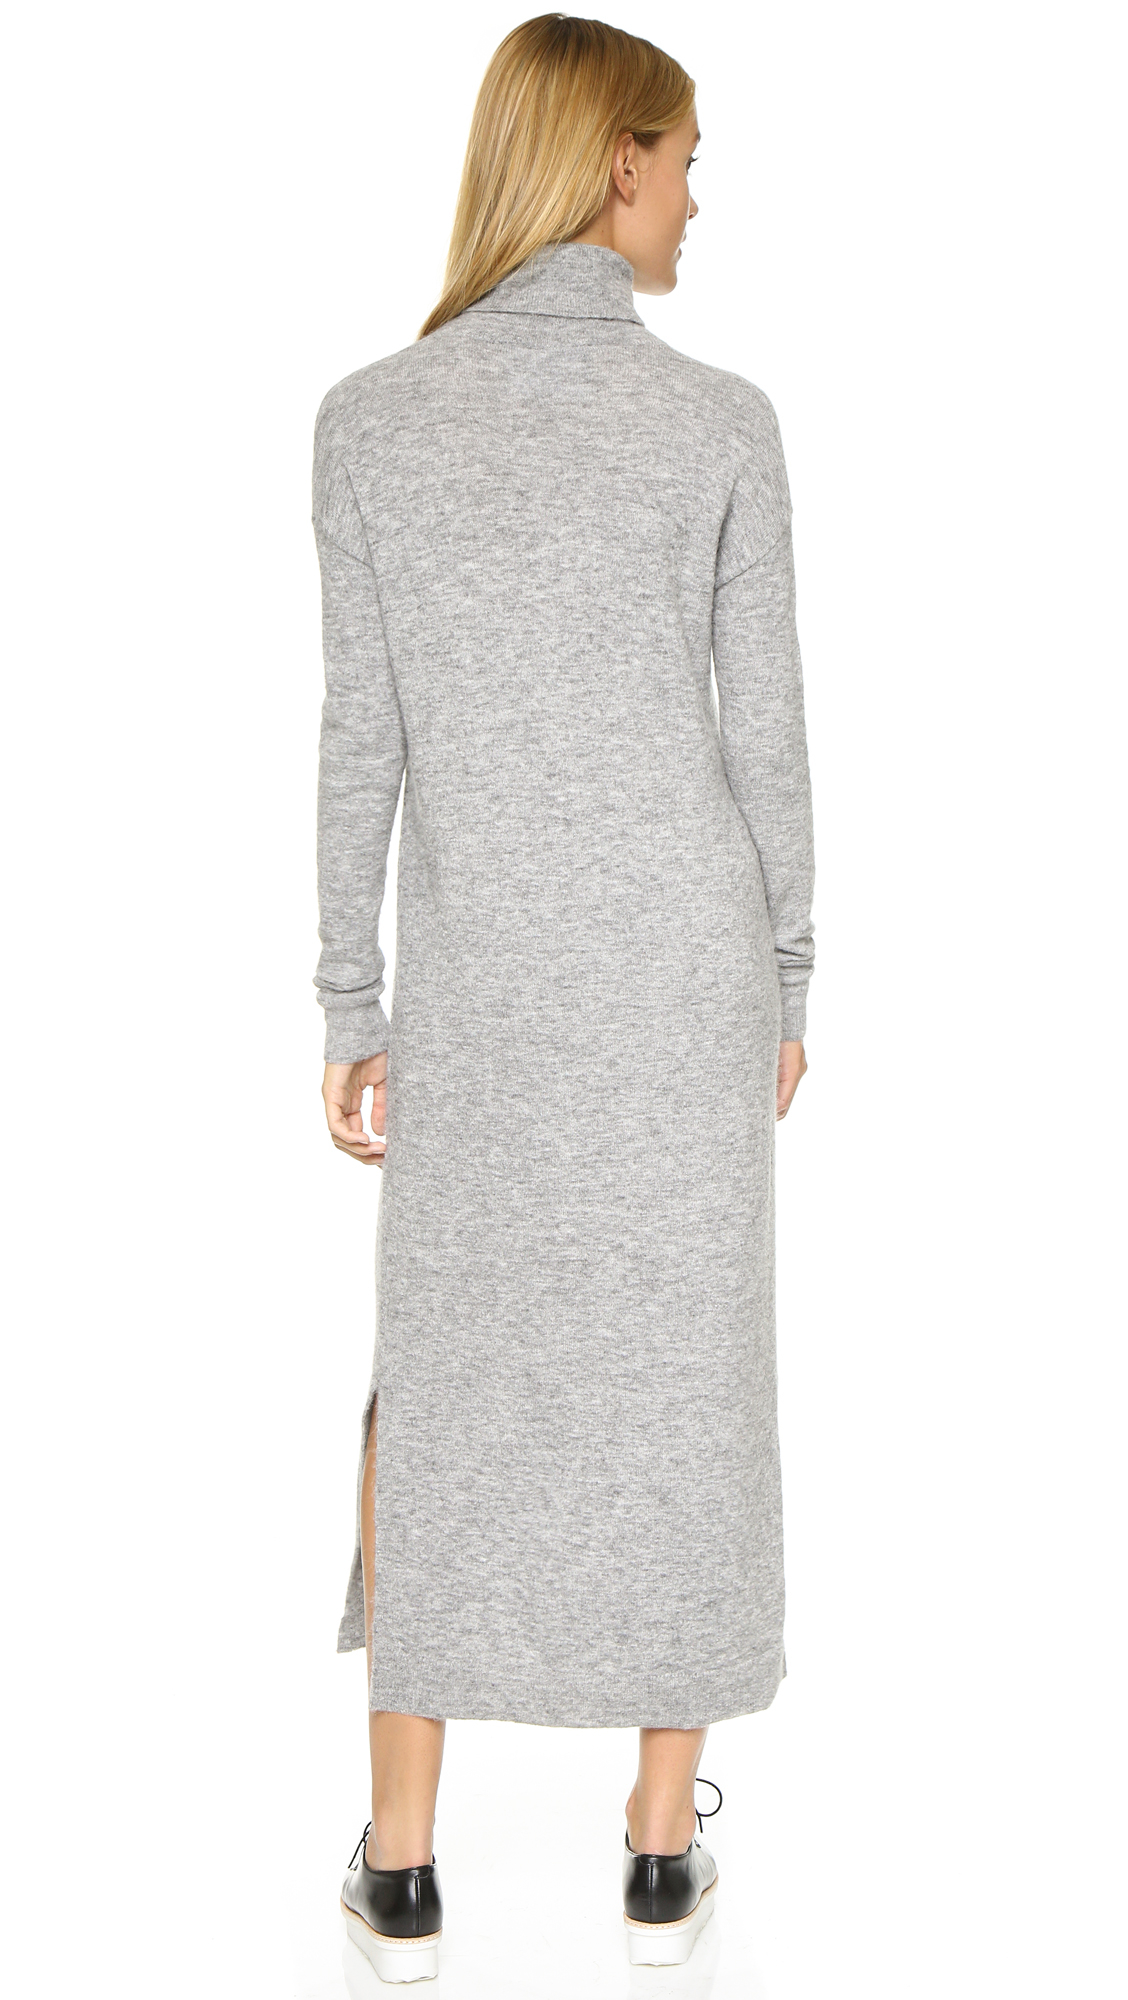 Designers Remix Synthetic Alta Knit Dress in Light Grey Melange (Grey) -  Lyst